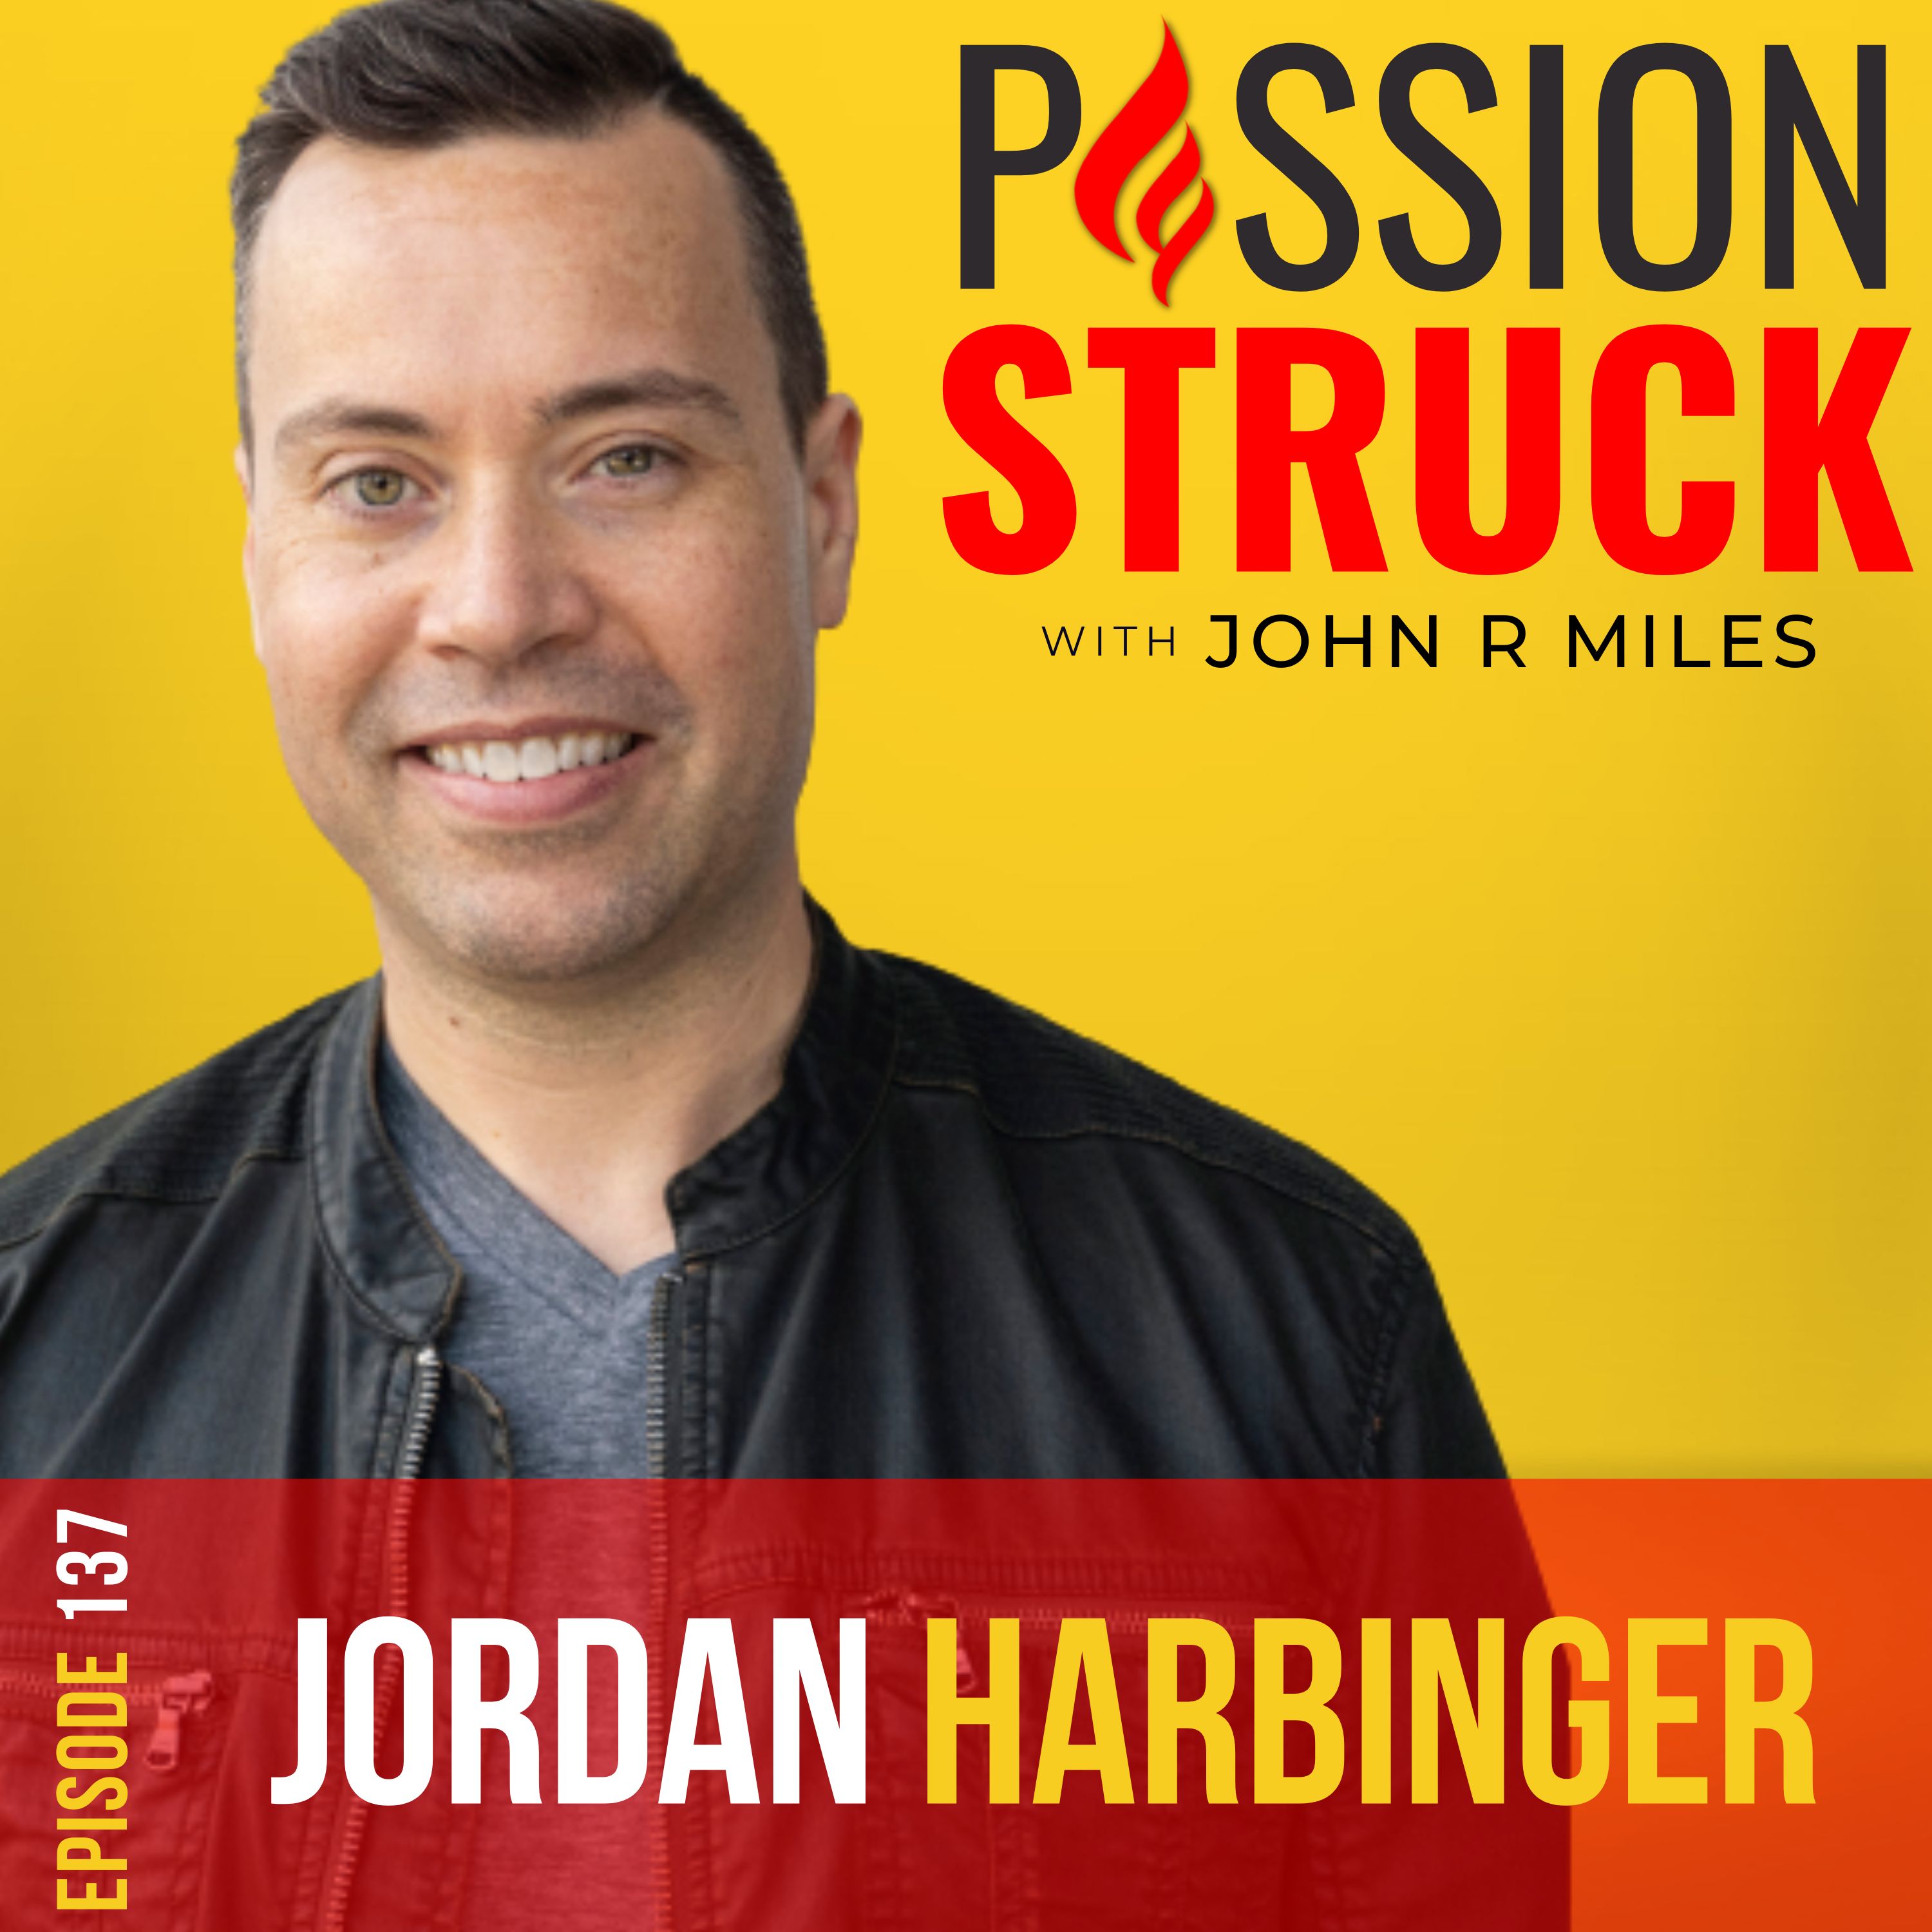 Episode 137 of Passion Struck with John R. Miles featuring Jordan Harbinger